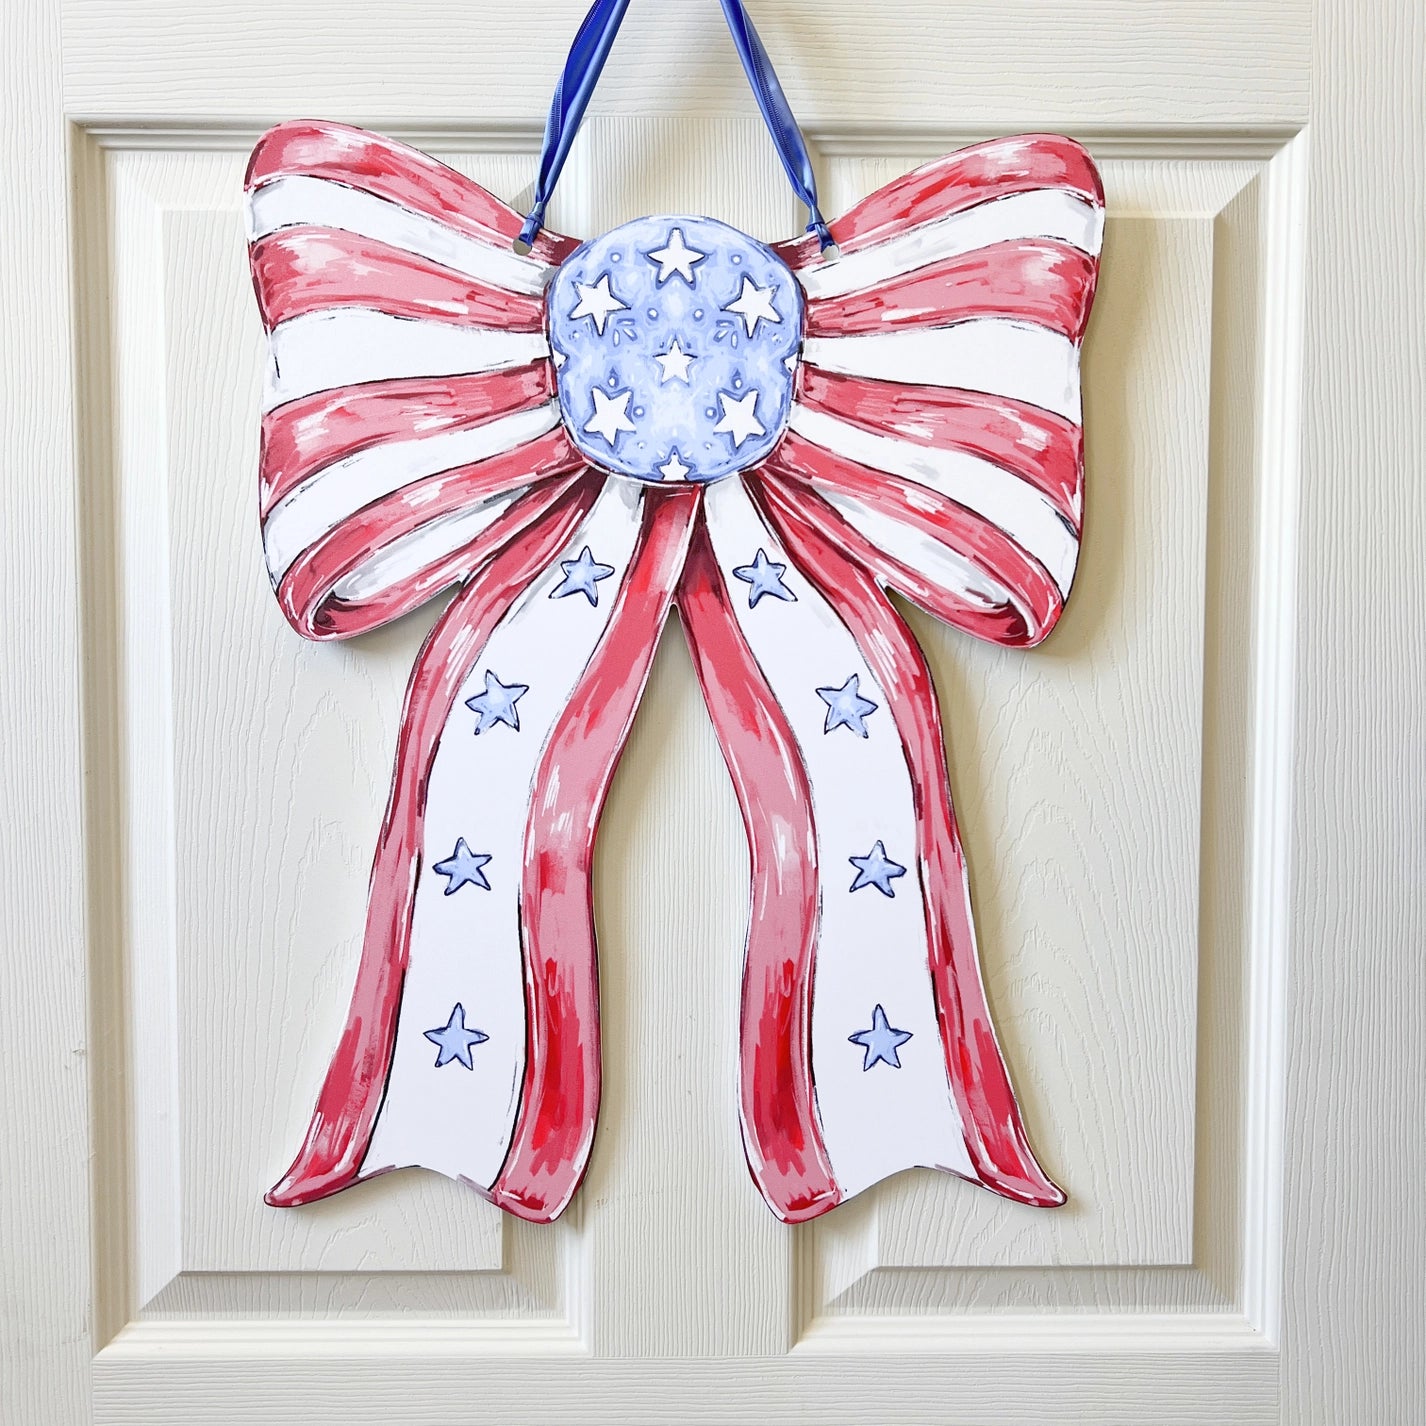 Patriotic Bow Door Hanger - USA 4th of July Memorial America